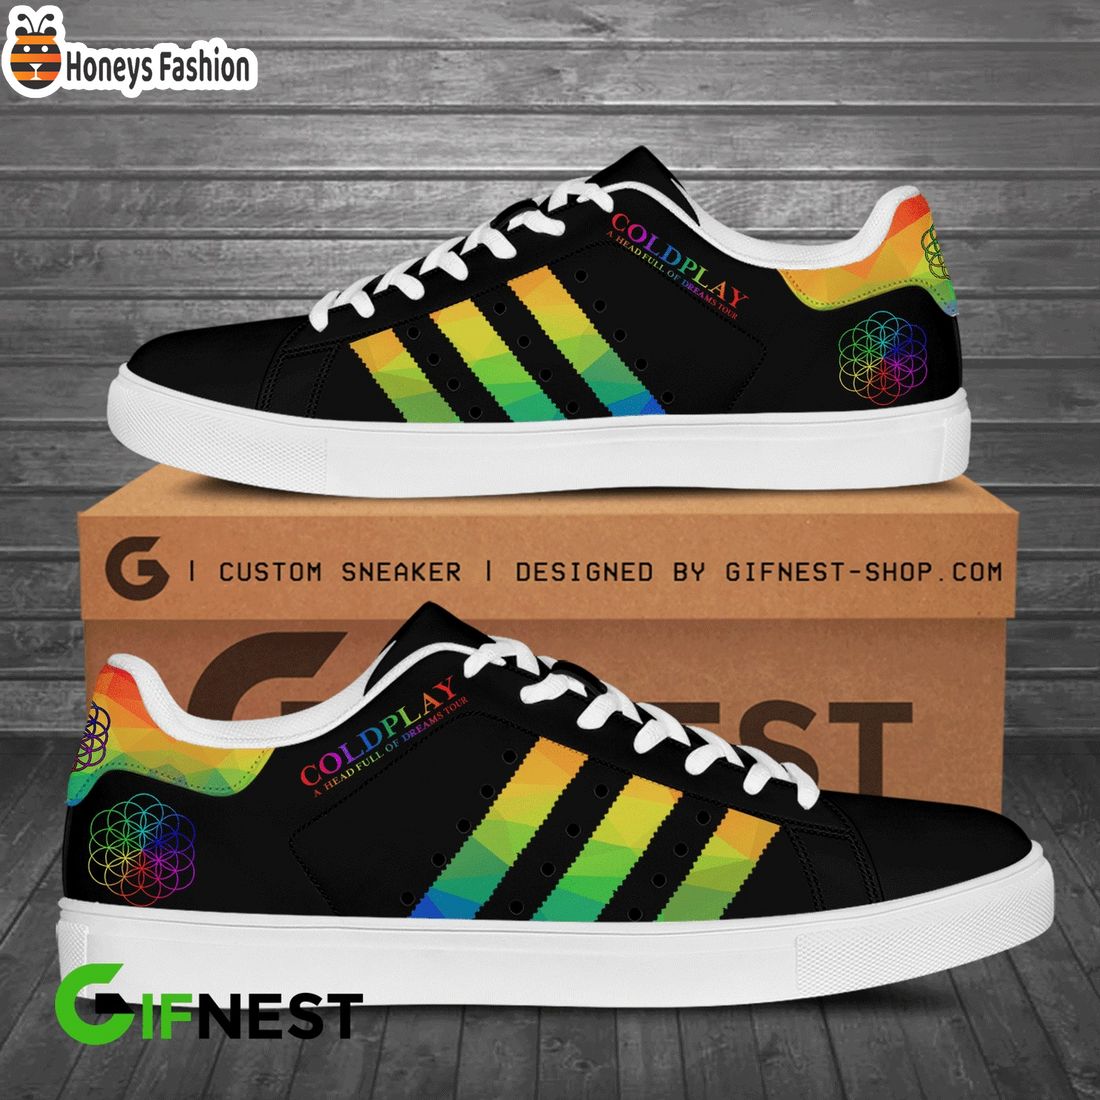 Coldplay x LGBT black stan smith skate shoes